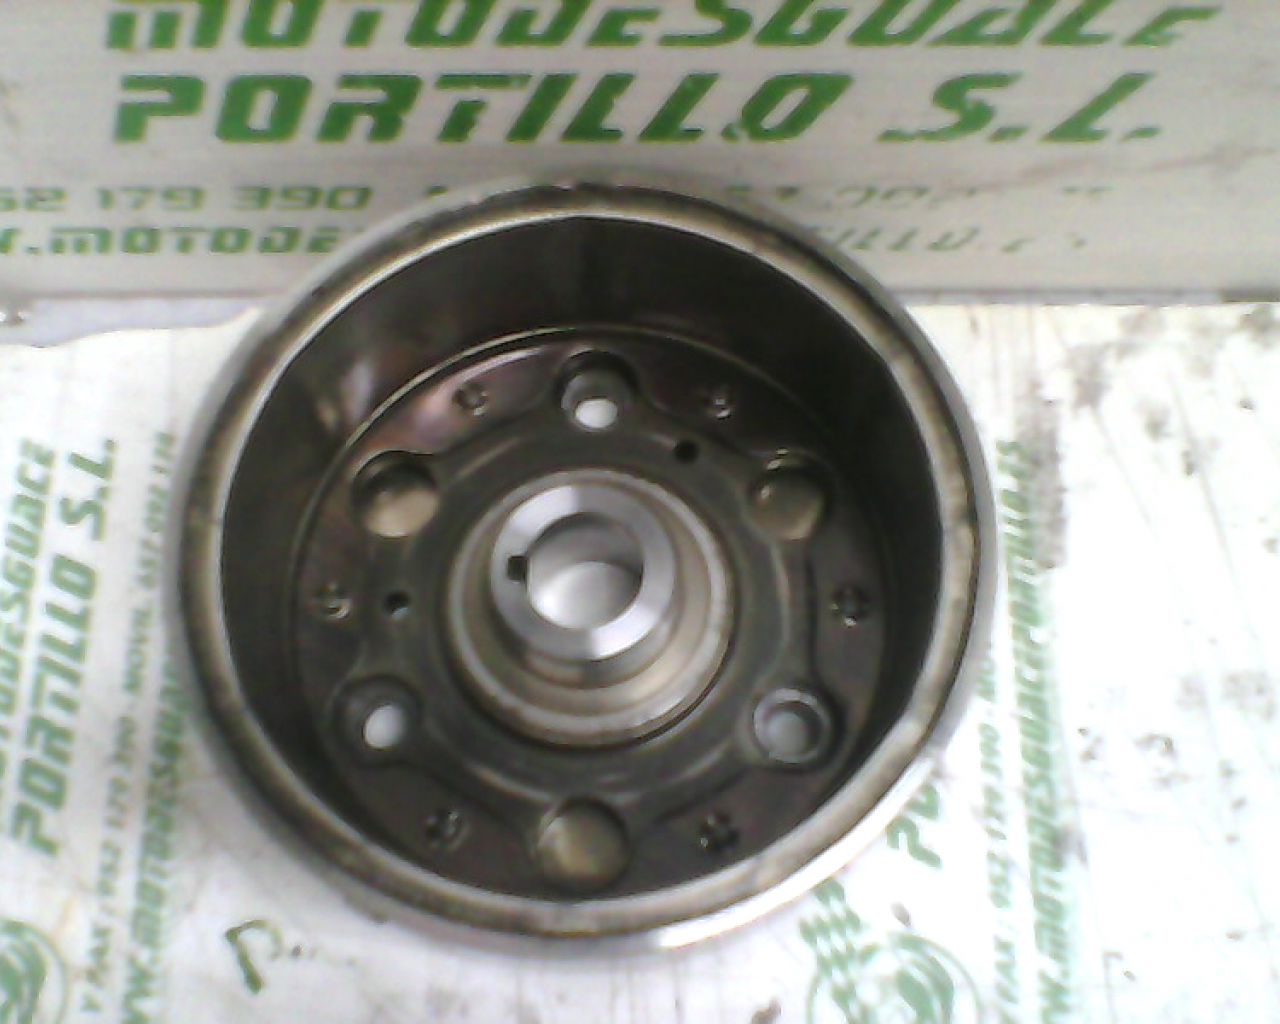 Plato magnetico Honda SH 125 i 09-10 (2009-2010)